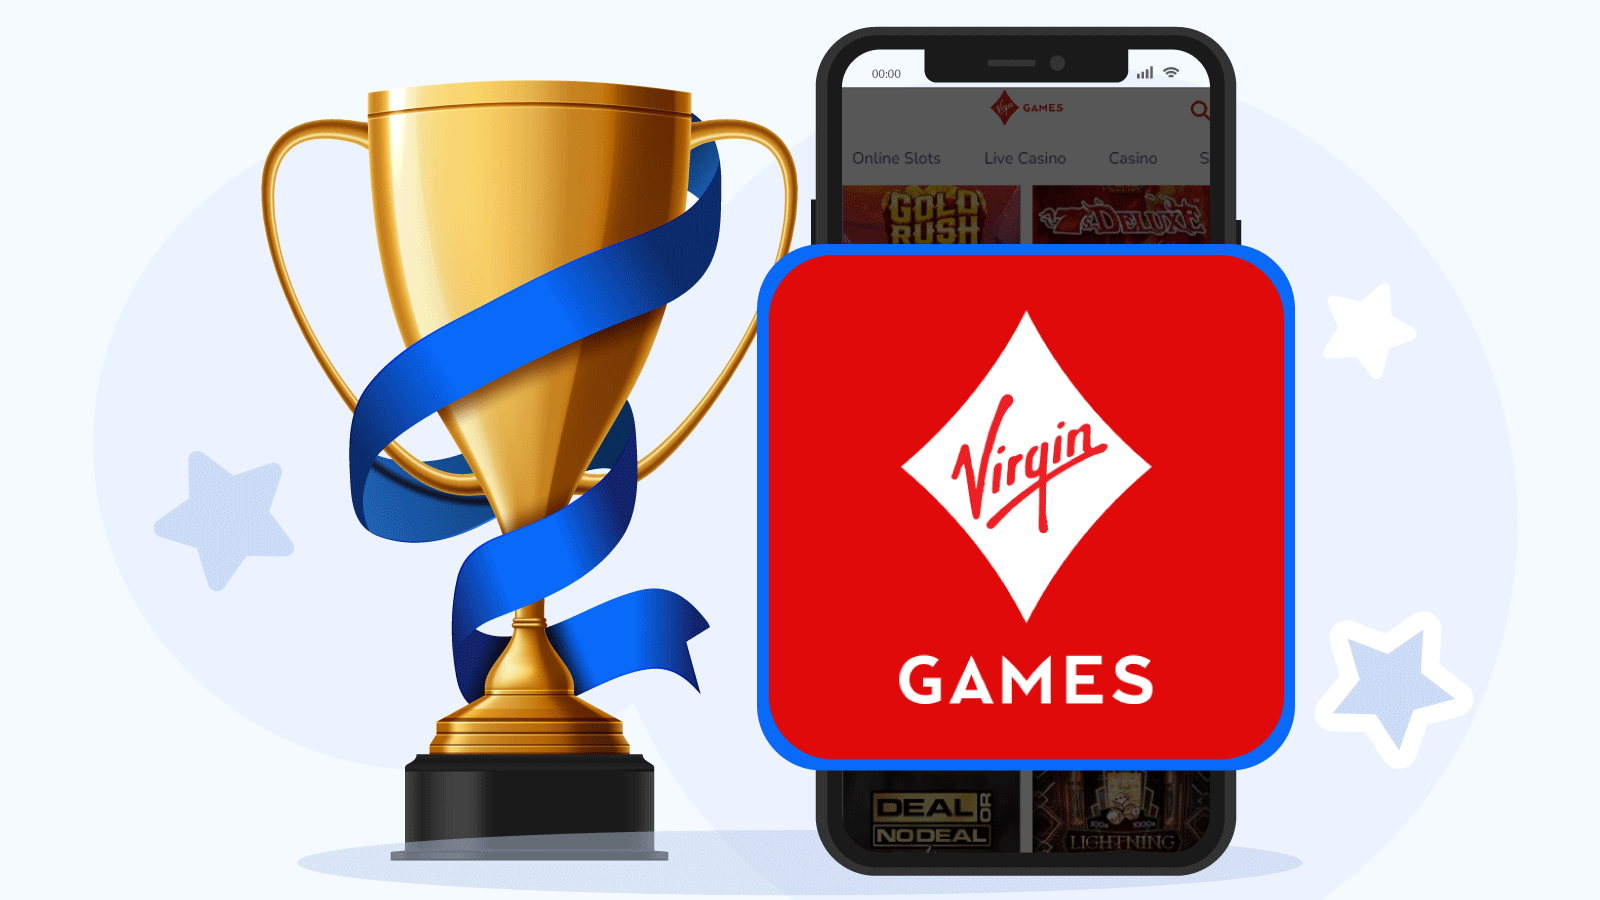 Virgin Games Casino – The Overall Best Mobile Casino